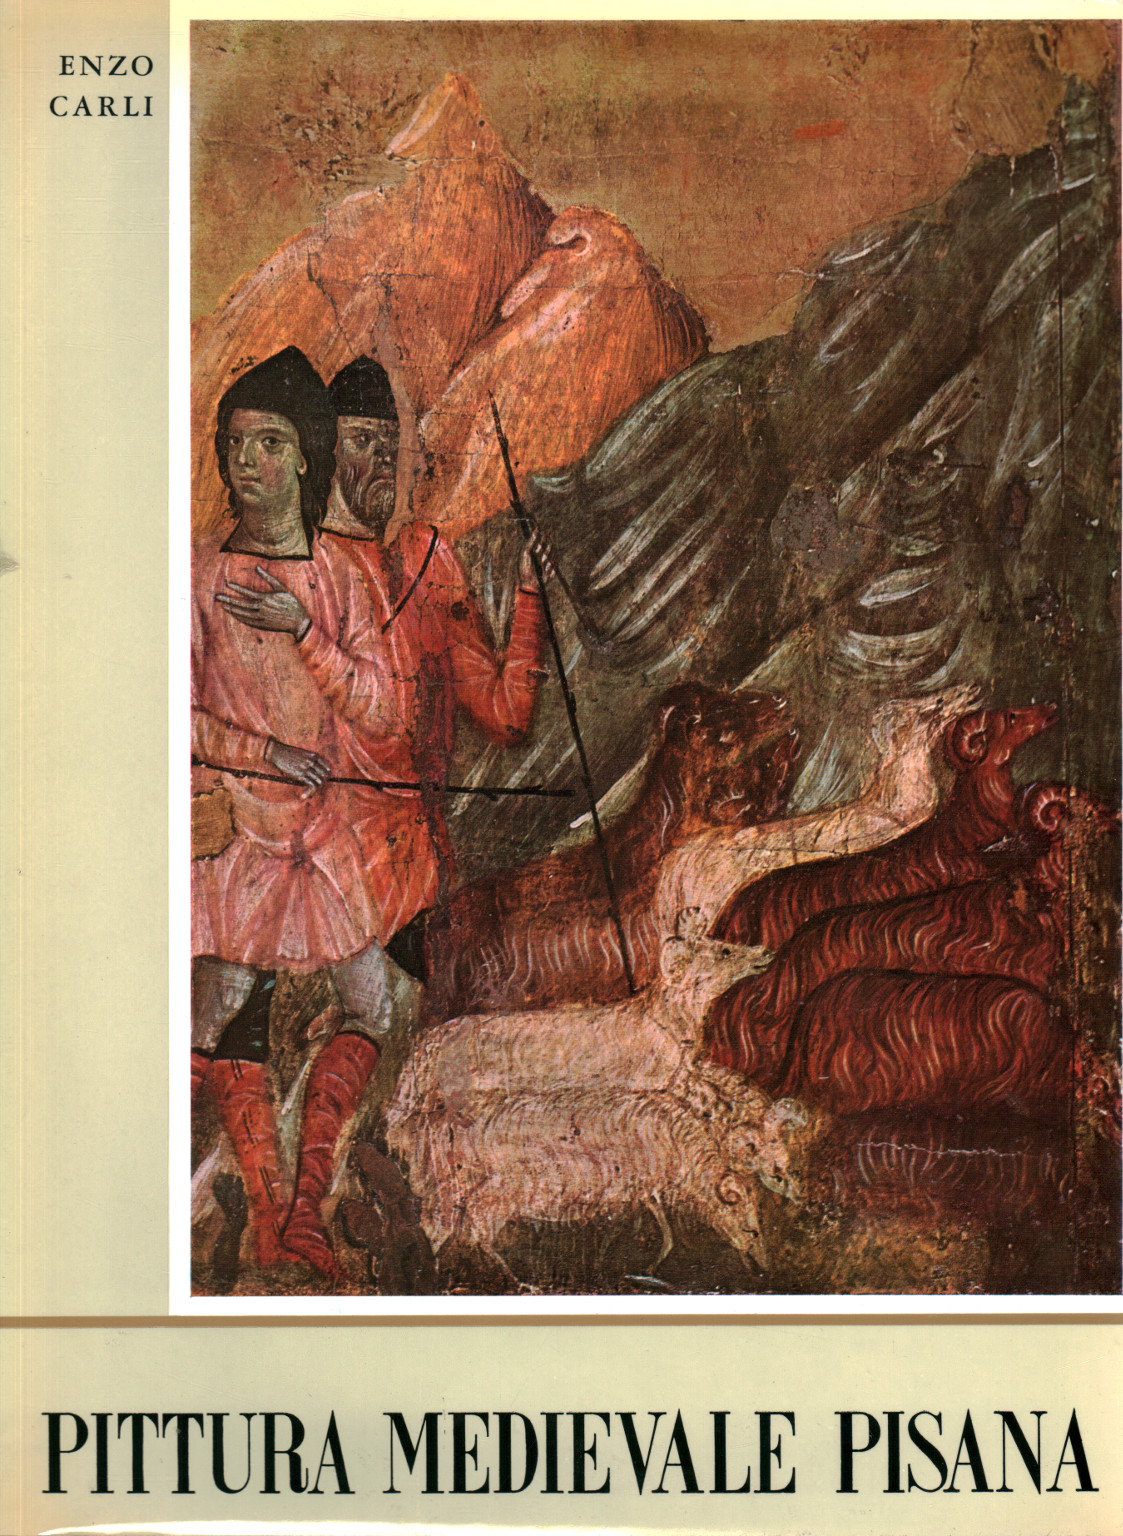 Pisan Medieval Painting, Enzo Carli